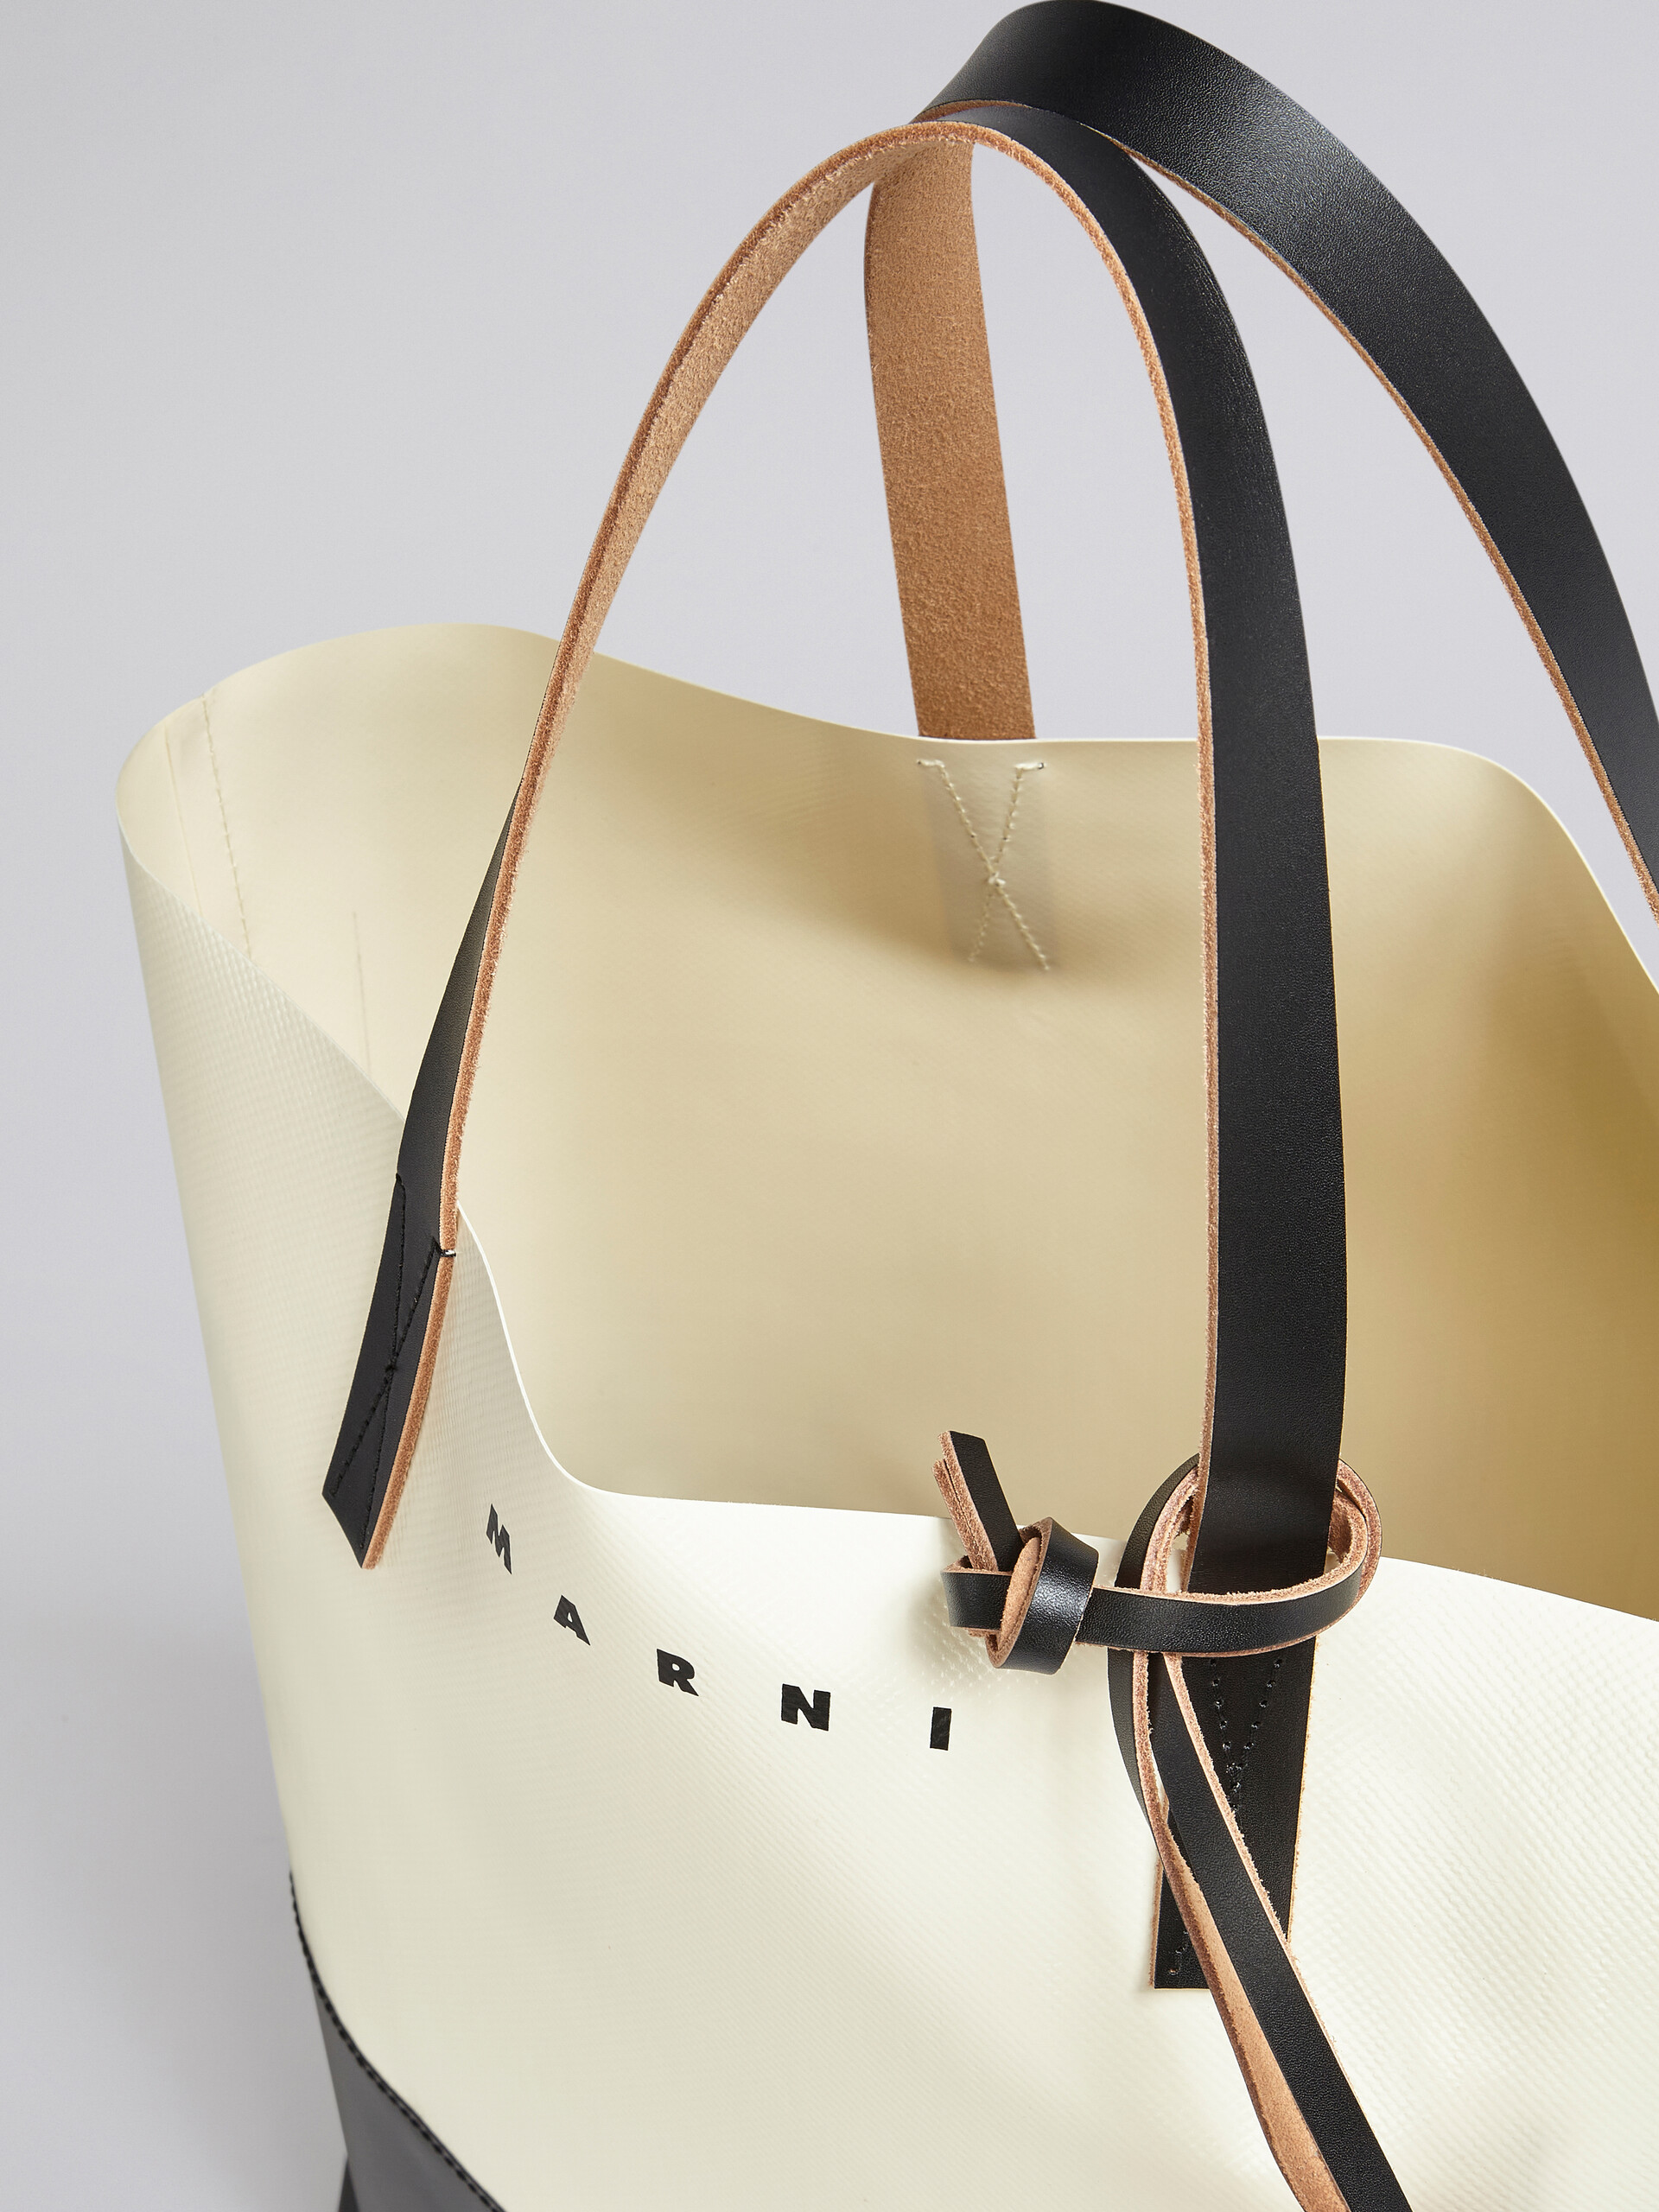 Orange and black Tribeca shopping bag - Shopping Bags - Image 3